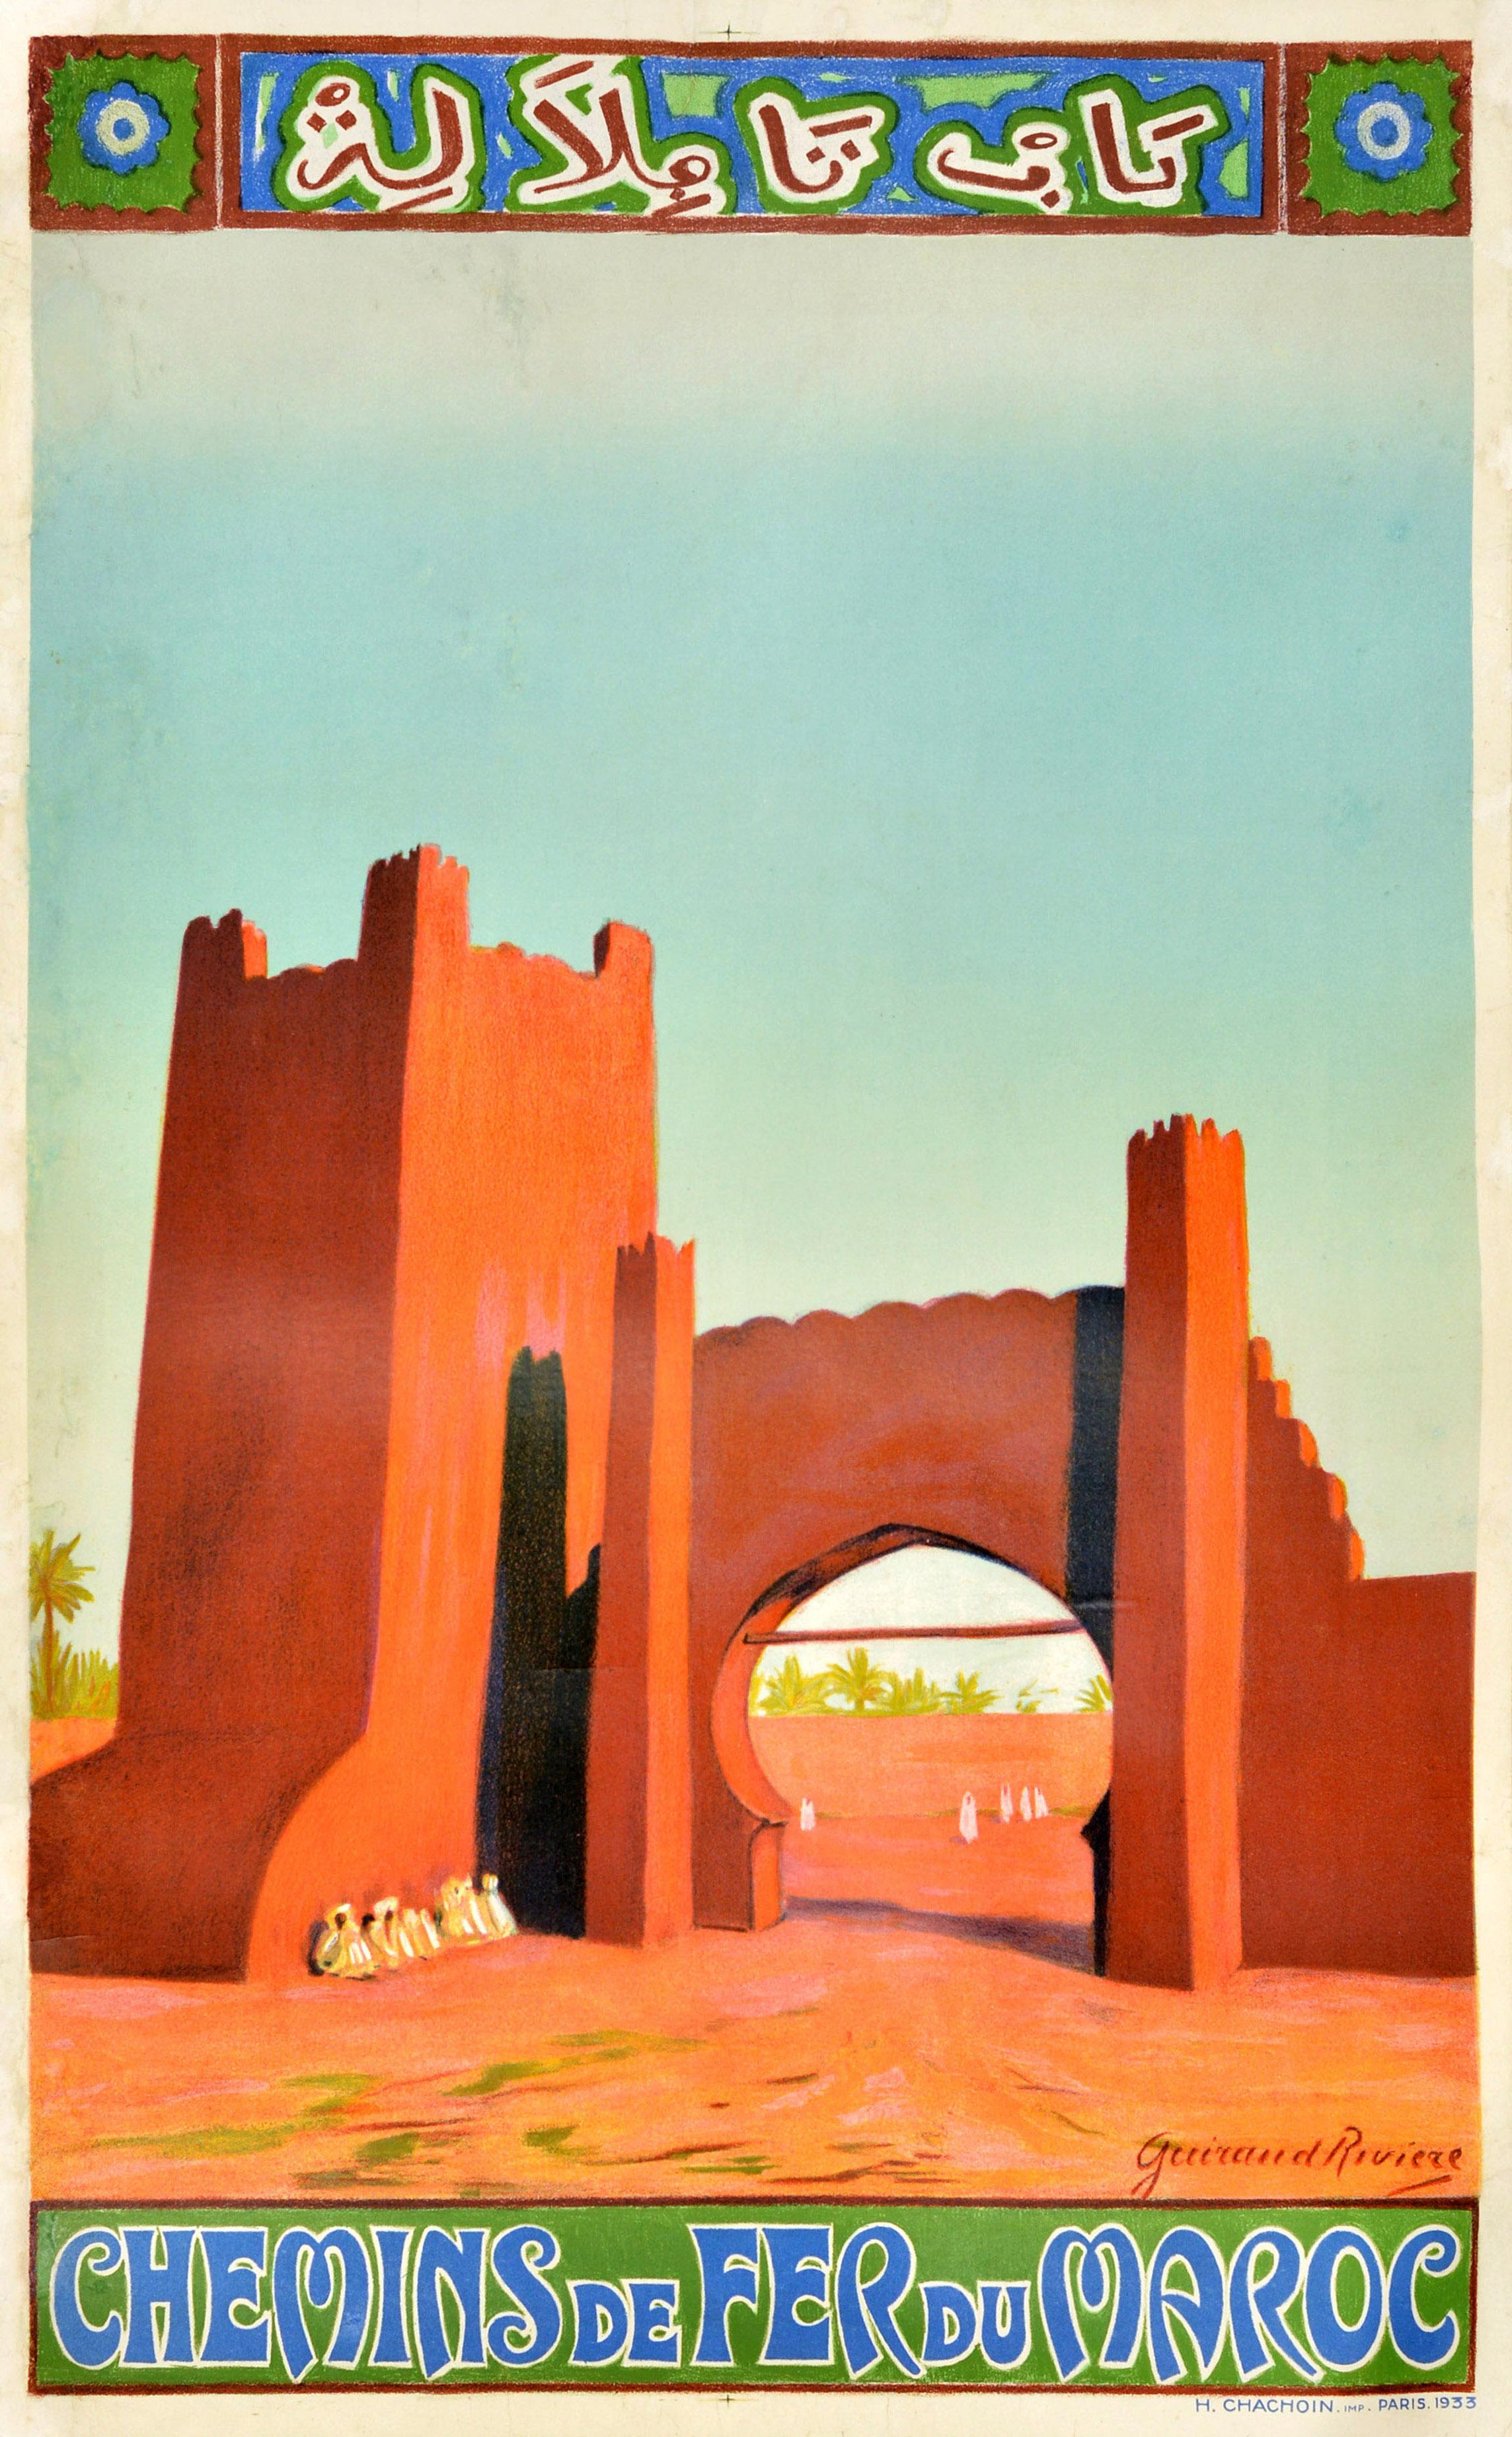 Maurice Guiraud-Rivière Print - Original Vintage Travel Poster Morocco Chemins De Fer Du Maroc Guiraud Riviere